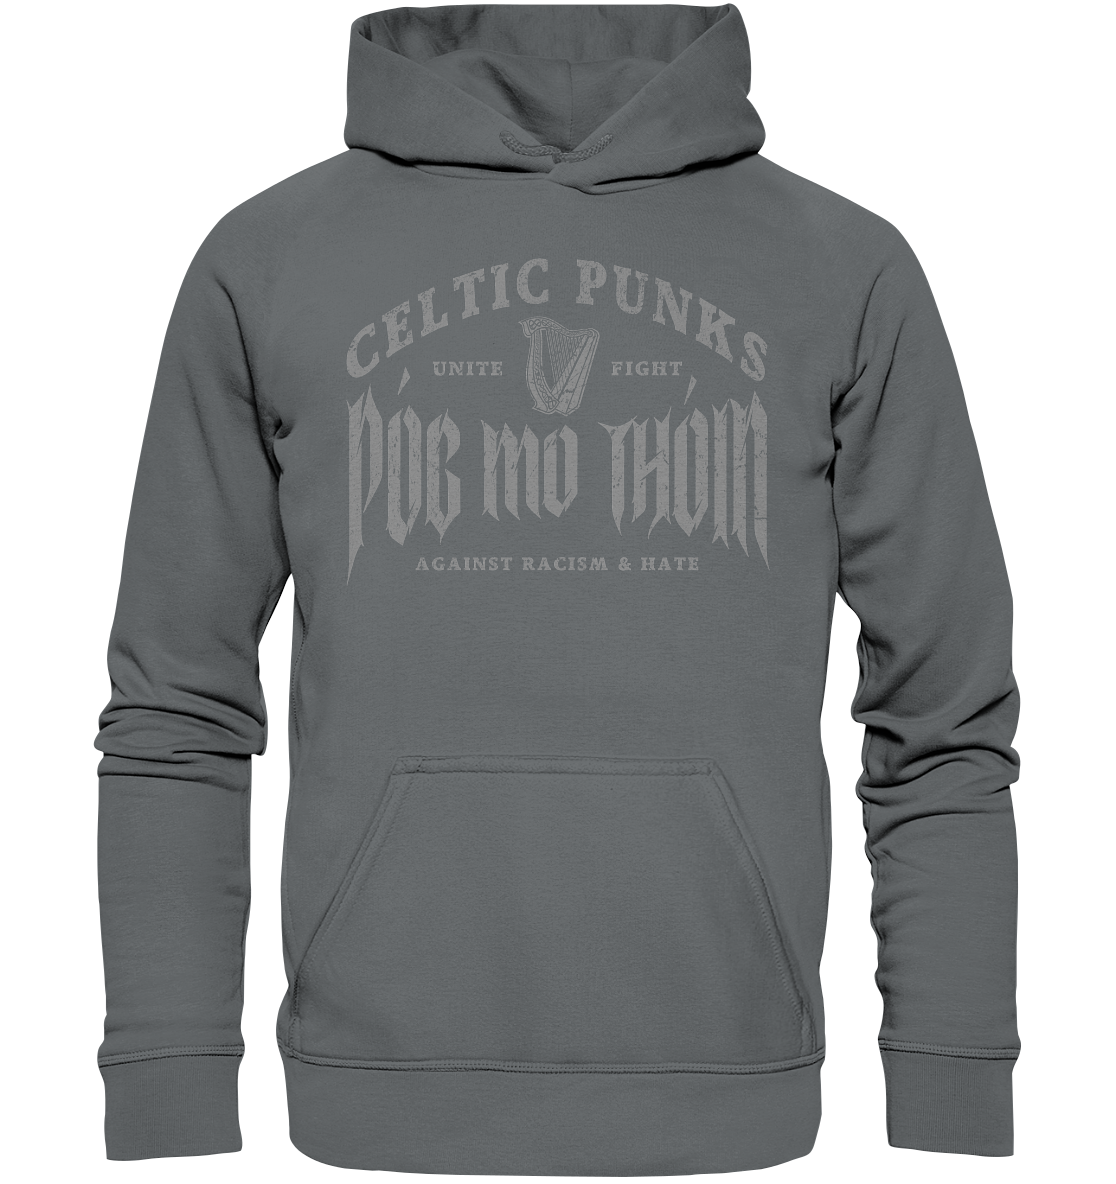 Póg Mo Thóin Streetwear "Celtic Punks Against Racism & Hate / Unite & Fight" - Basic Unisex Hoodie